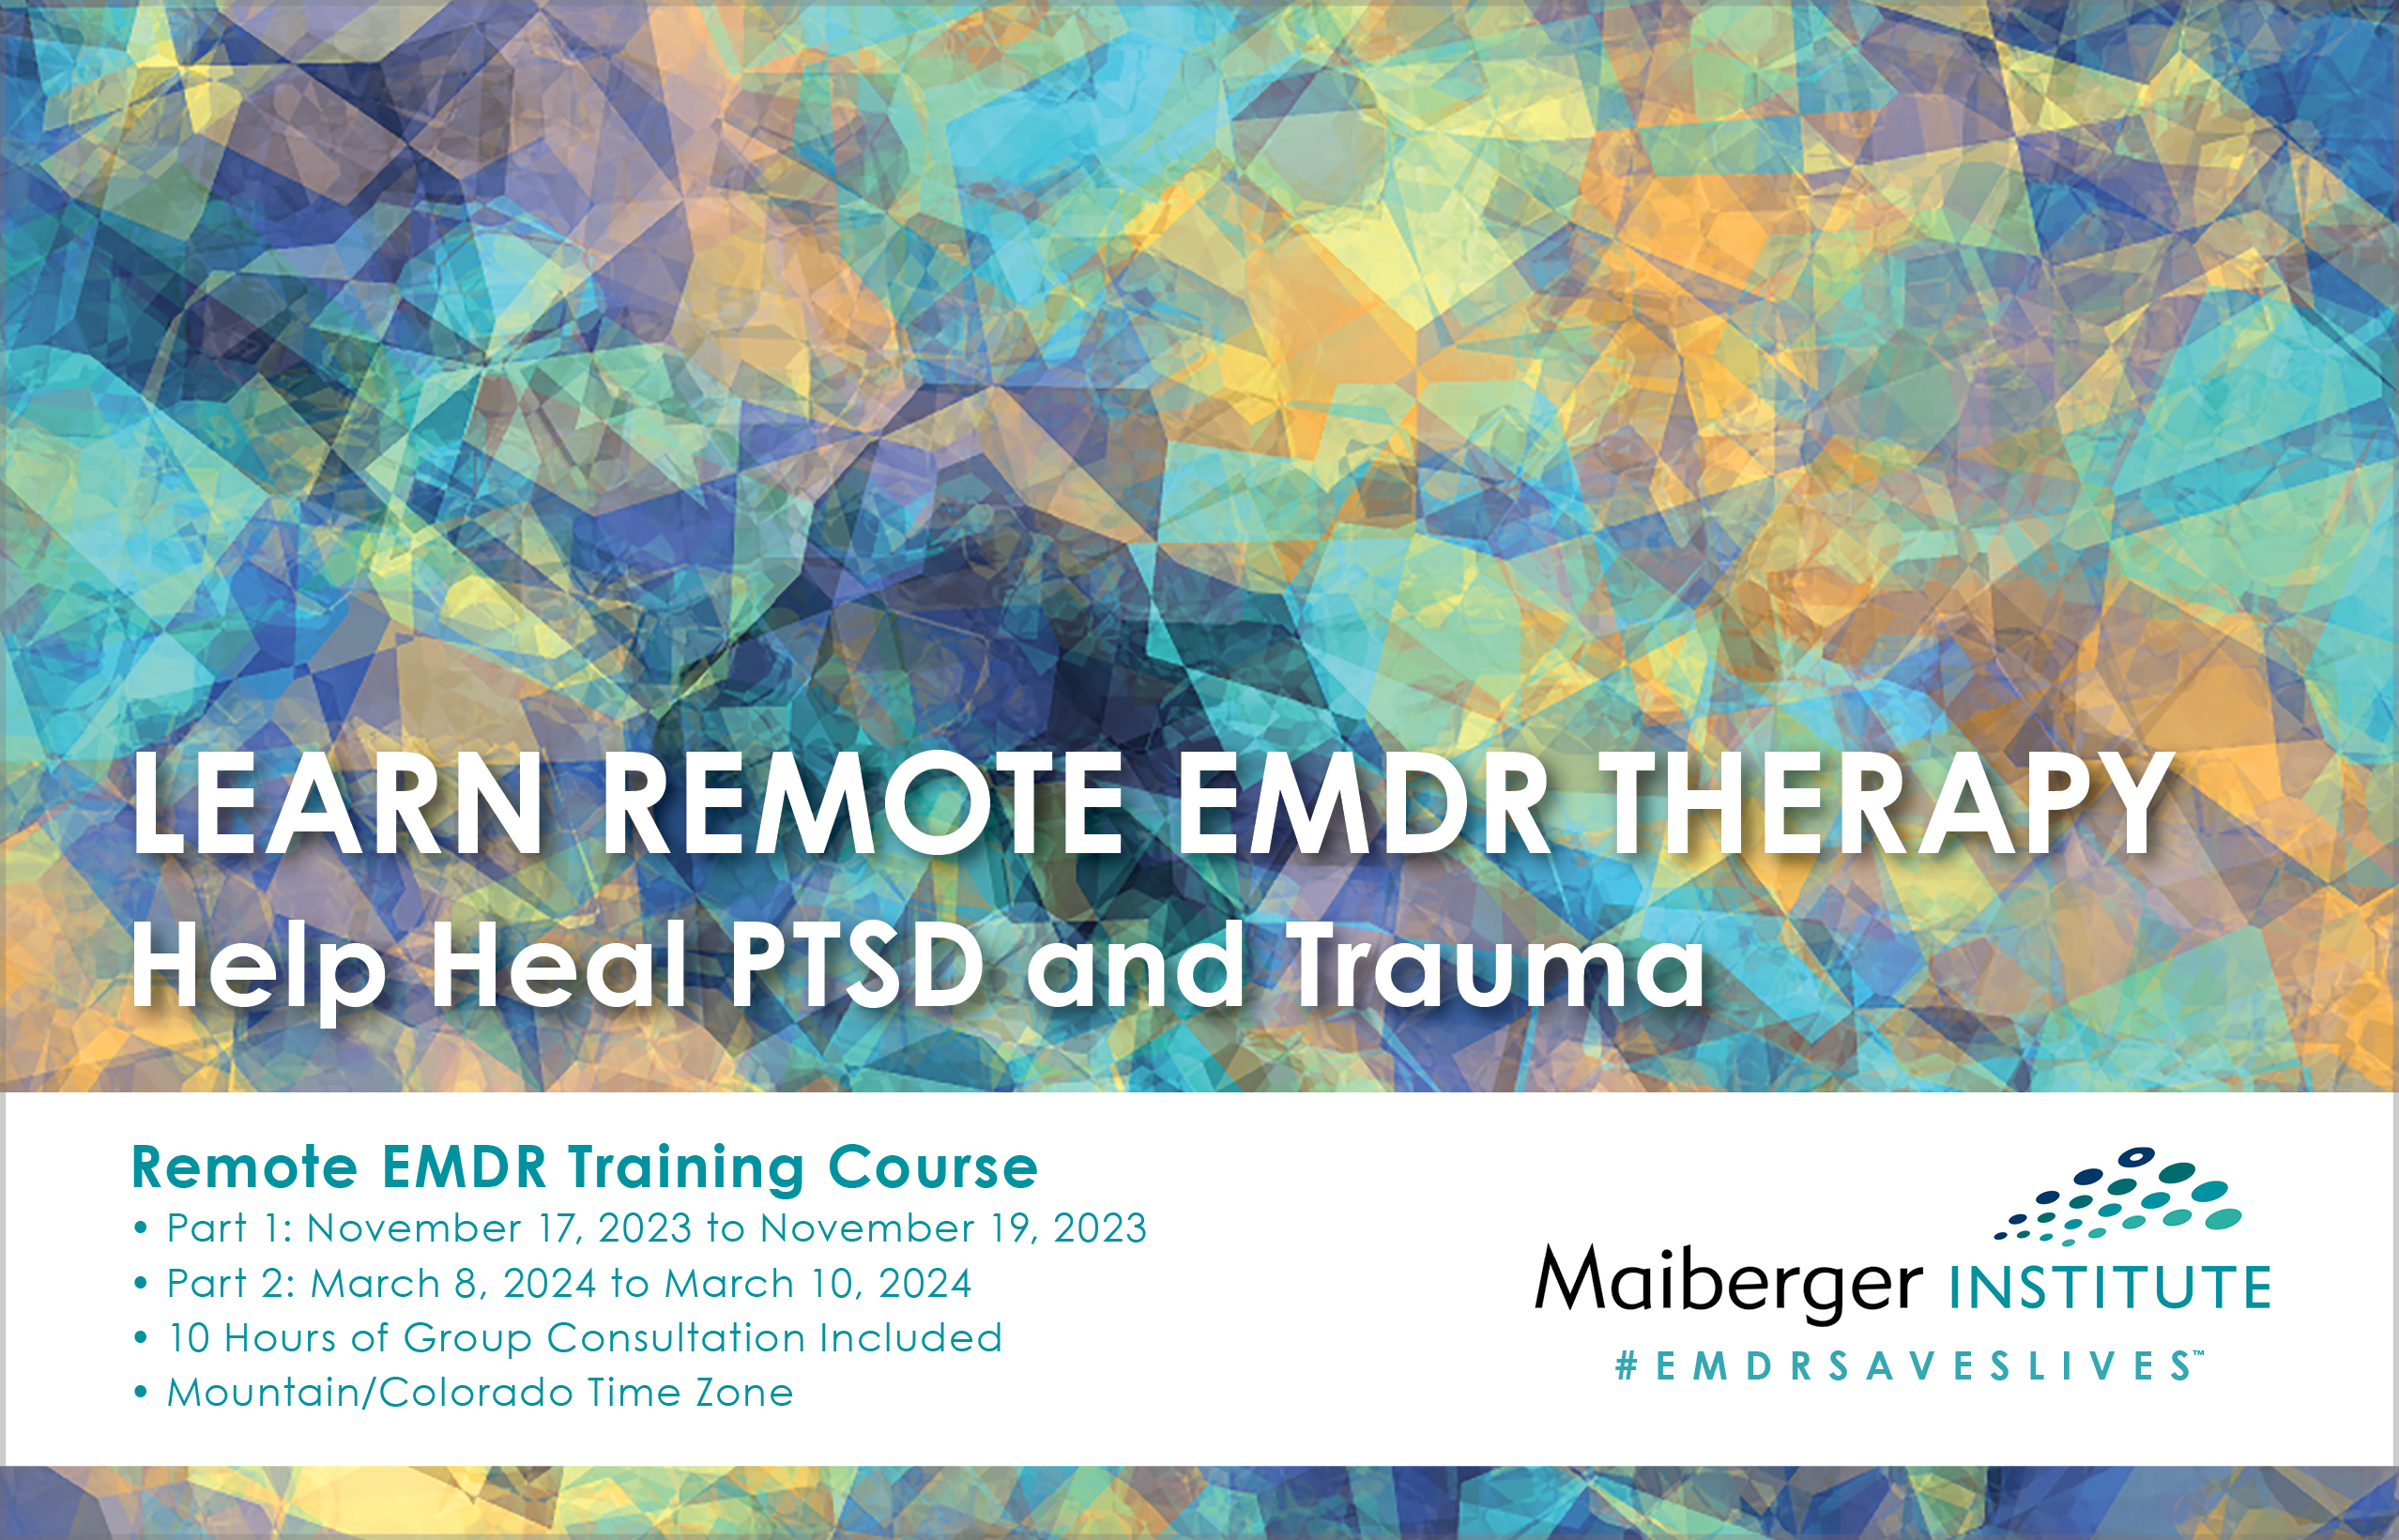 Remote EMDR Training Course - November 2023 and March 2024 - Maiberger Institute - EMDR EVENTS CALENDAR